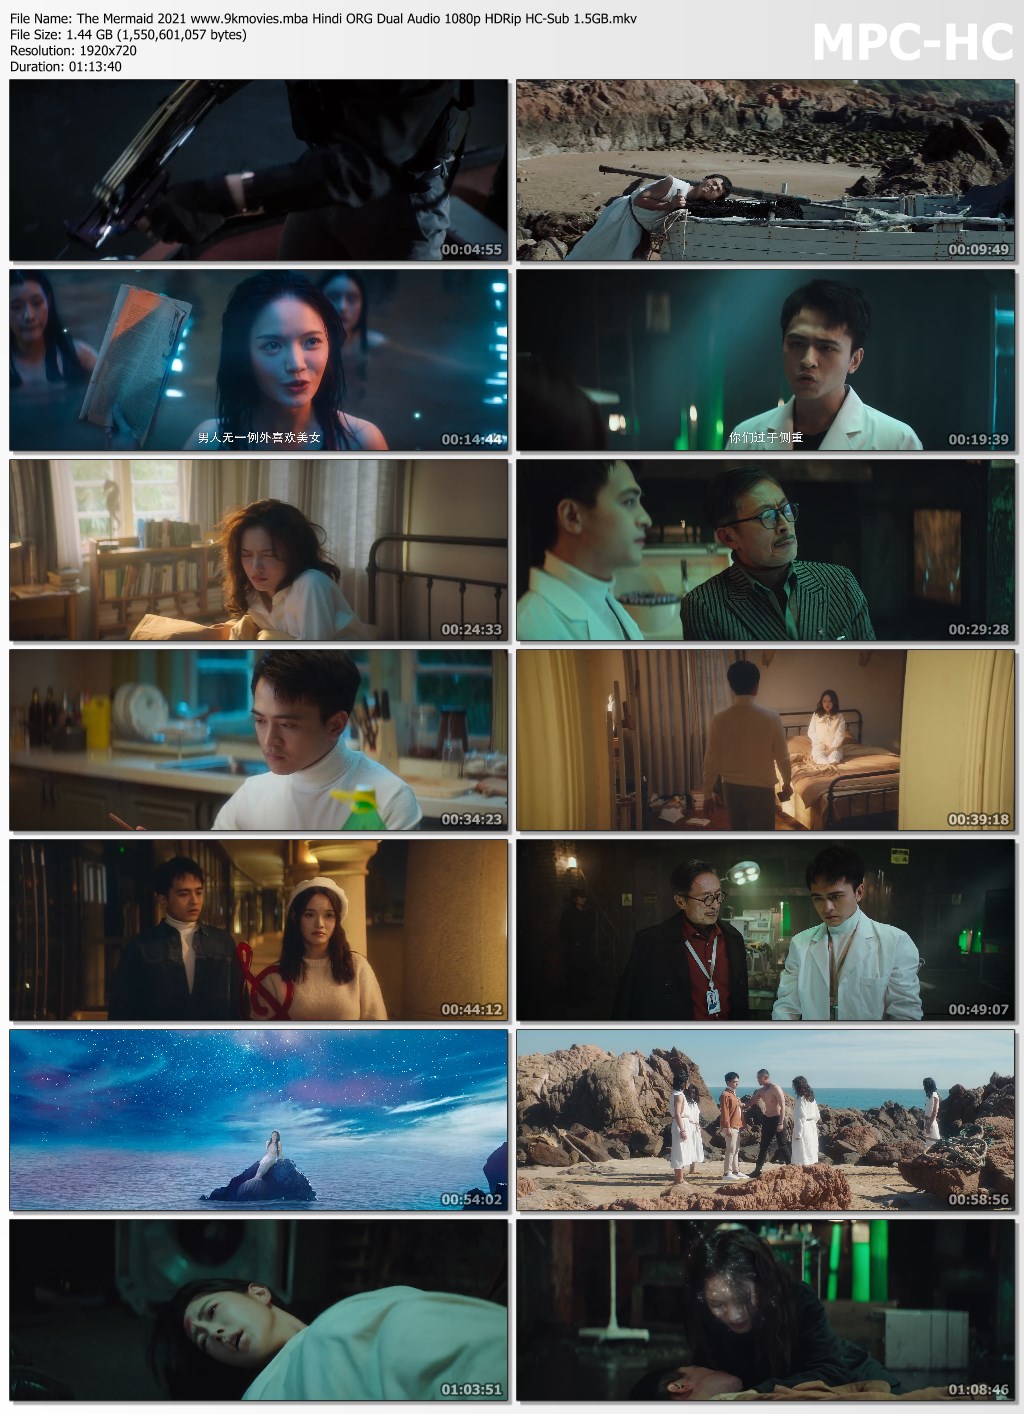 Aligarh 2016 Hindi 720p 480p WEB-DL x264 Full Movie